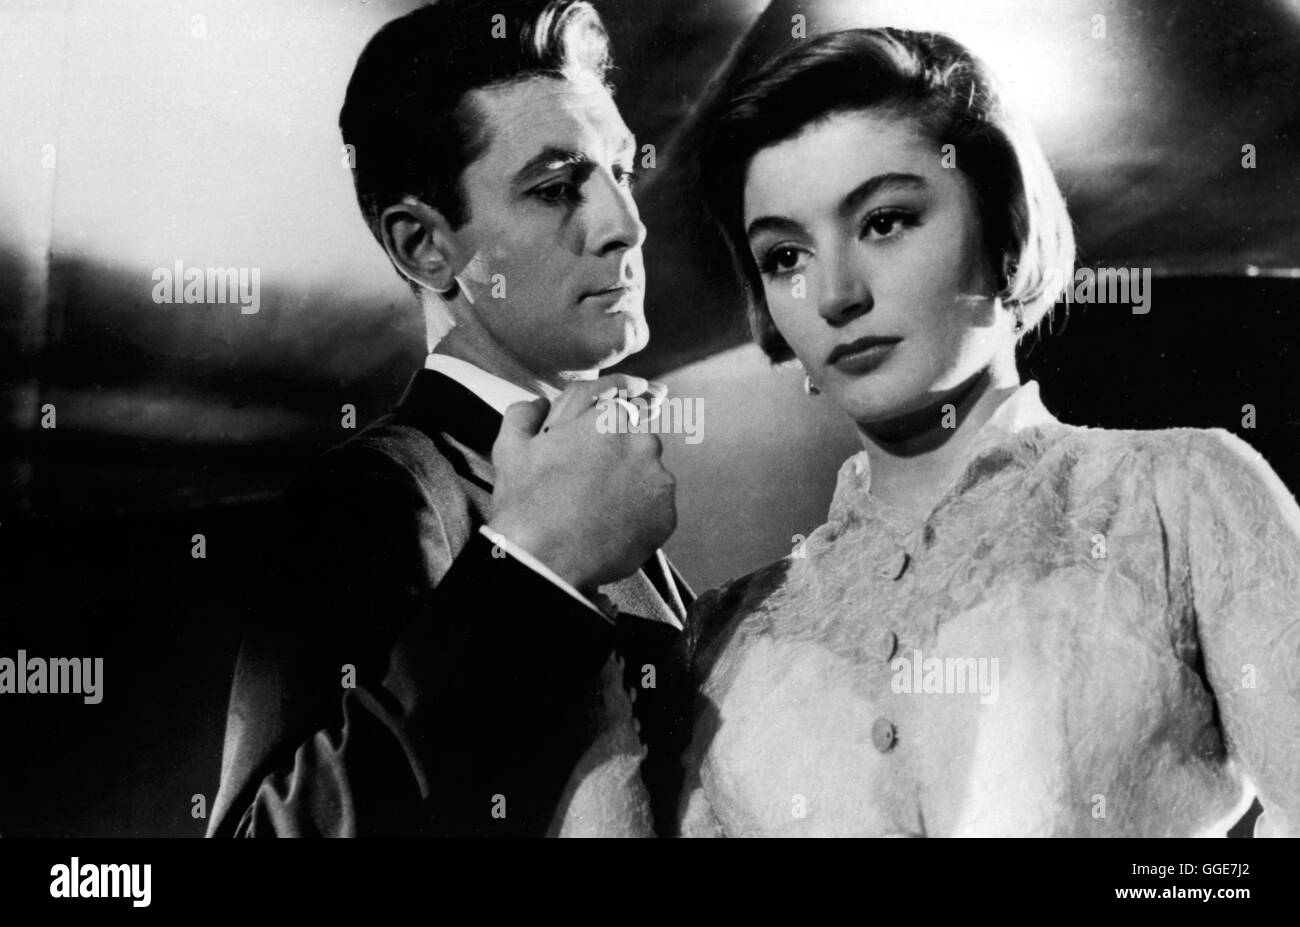 RIDEAU CRAMOISI / Rideau cramoisi / JEAN-CLAUDE PASCALl und ANOUK AIMéE in dem Film 'Rideau cramoisi' (1952) aka. Rideau cramoisi Stock Photo